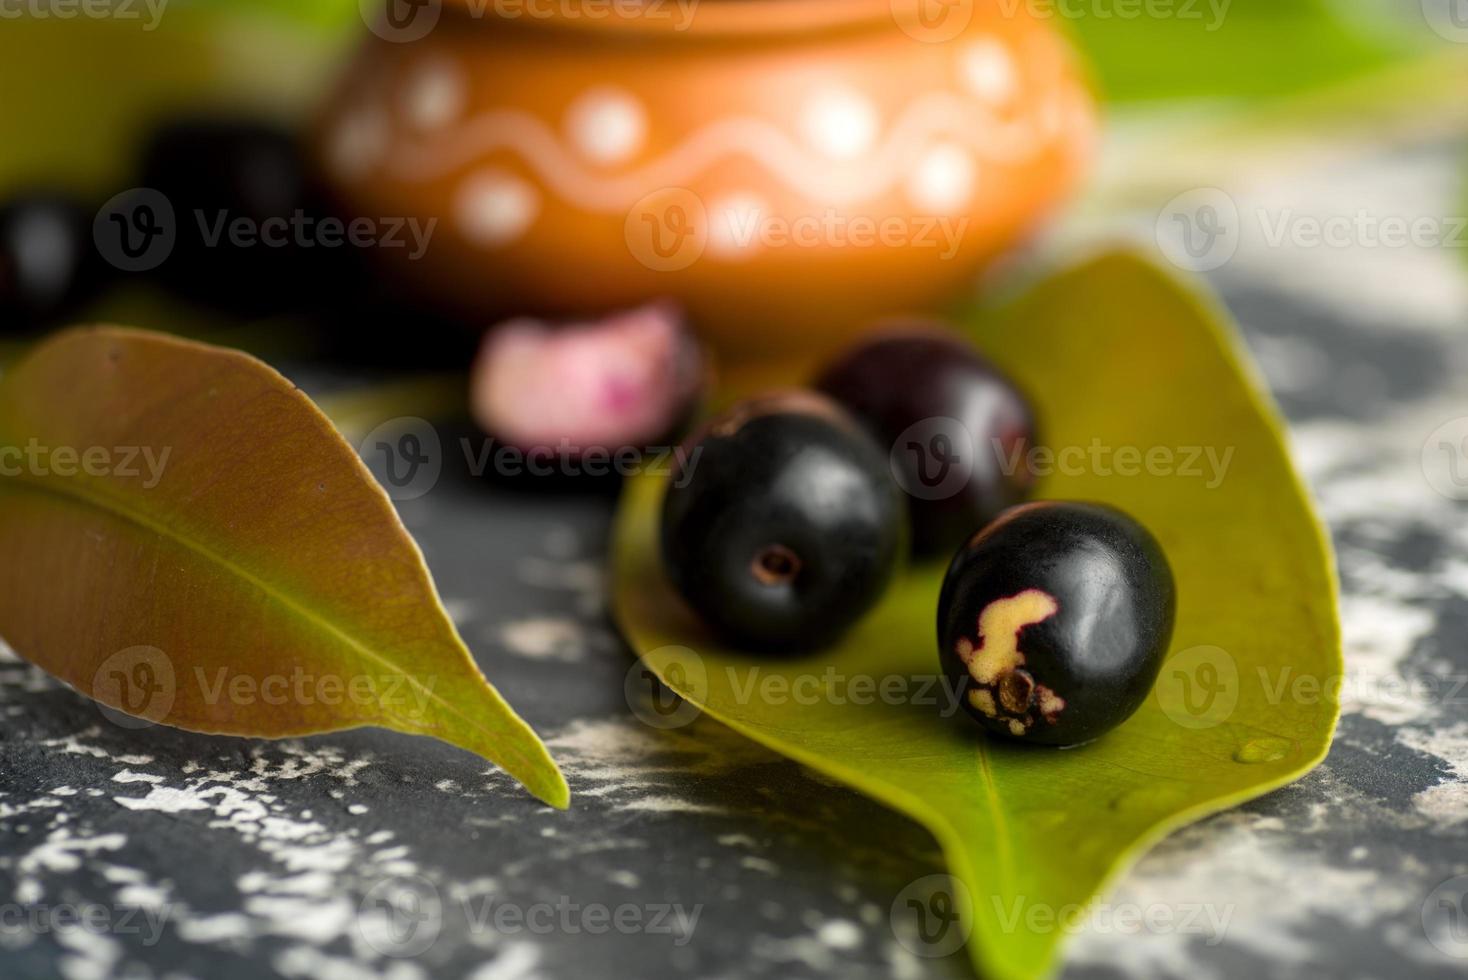 jambolan pruim of jambul of jamun fruit, java pruim syzygium cumini met blad op steen gestructureerde achtergrond. foto